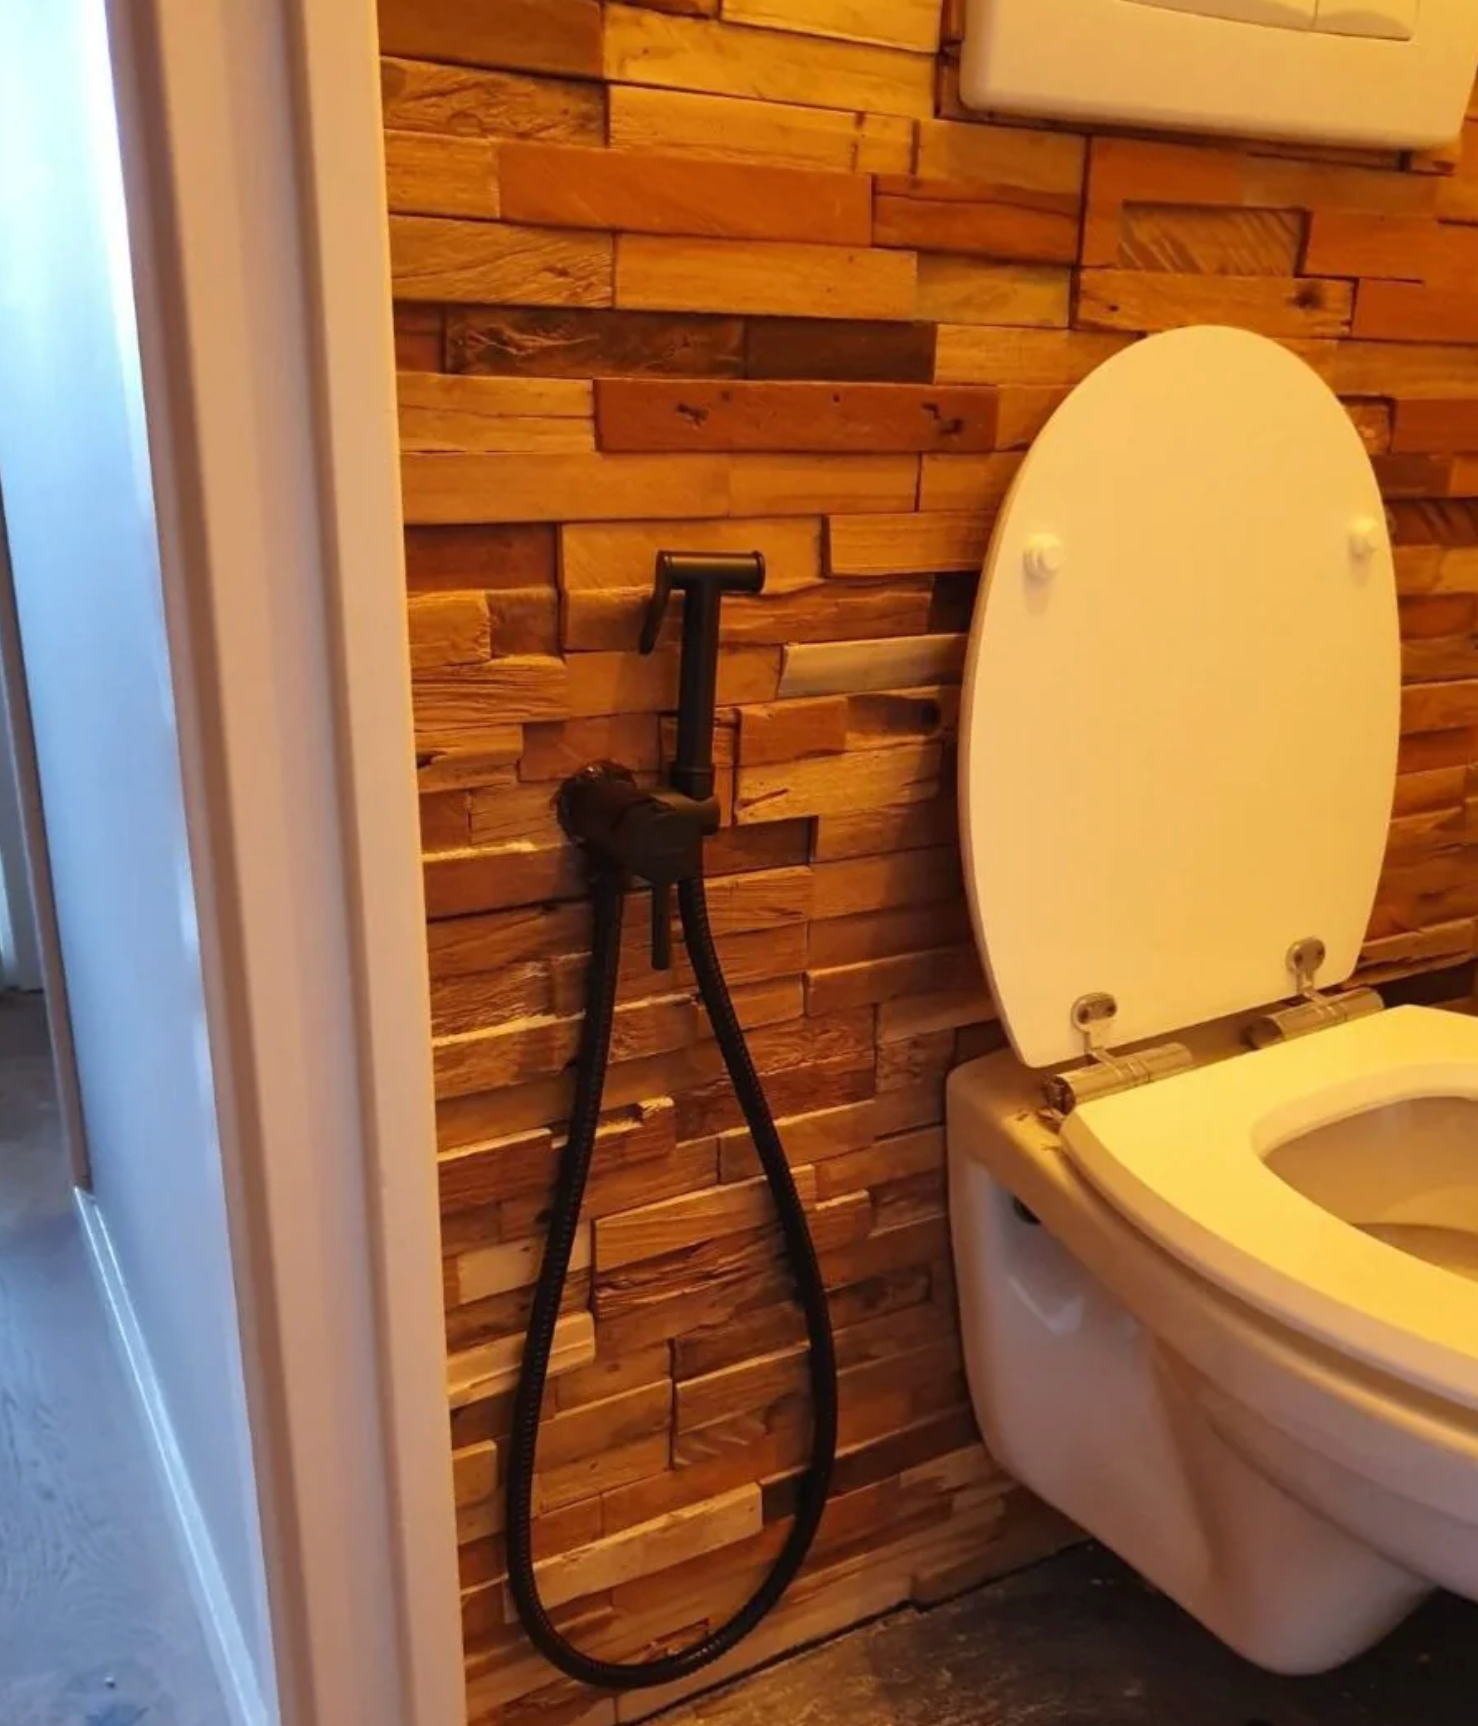 Hotvalve built-in toilet shower set made of stainless steel black (hot water) 